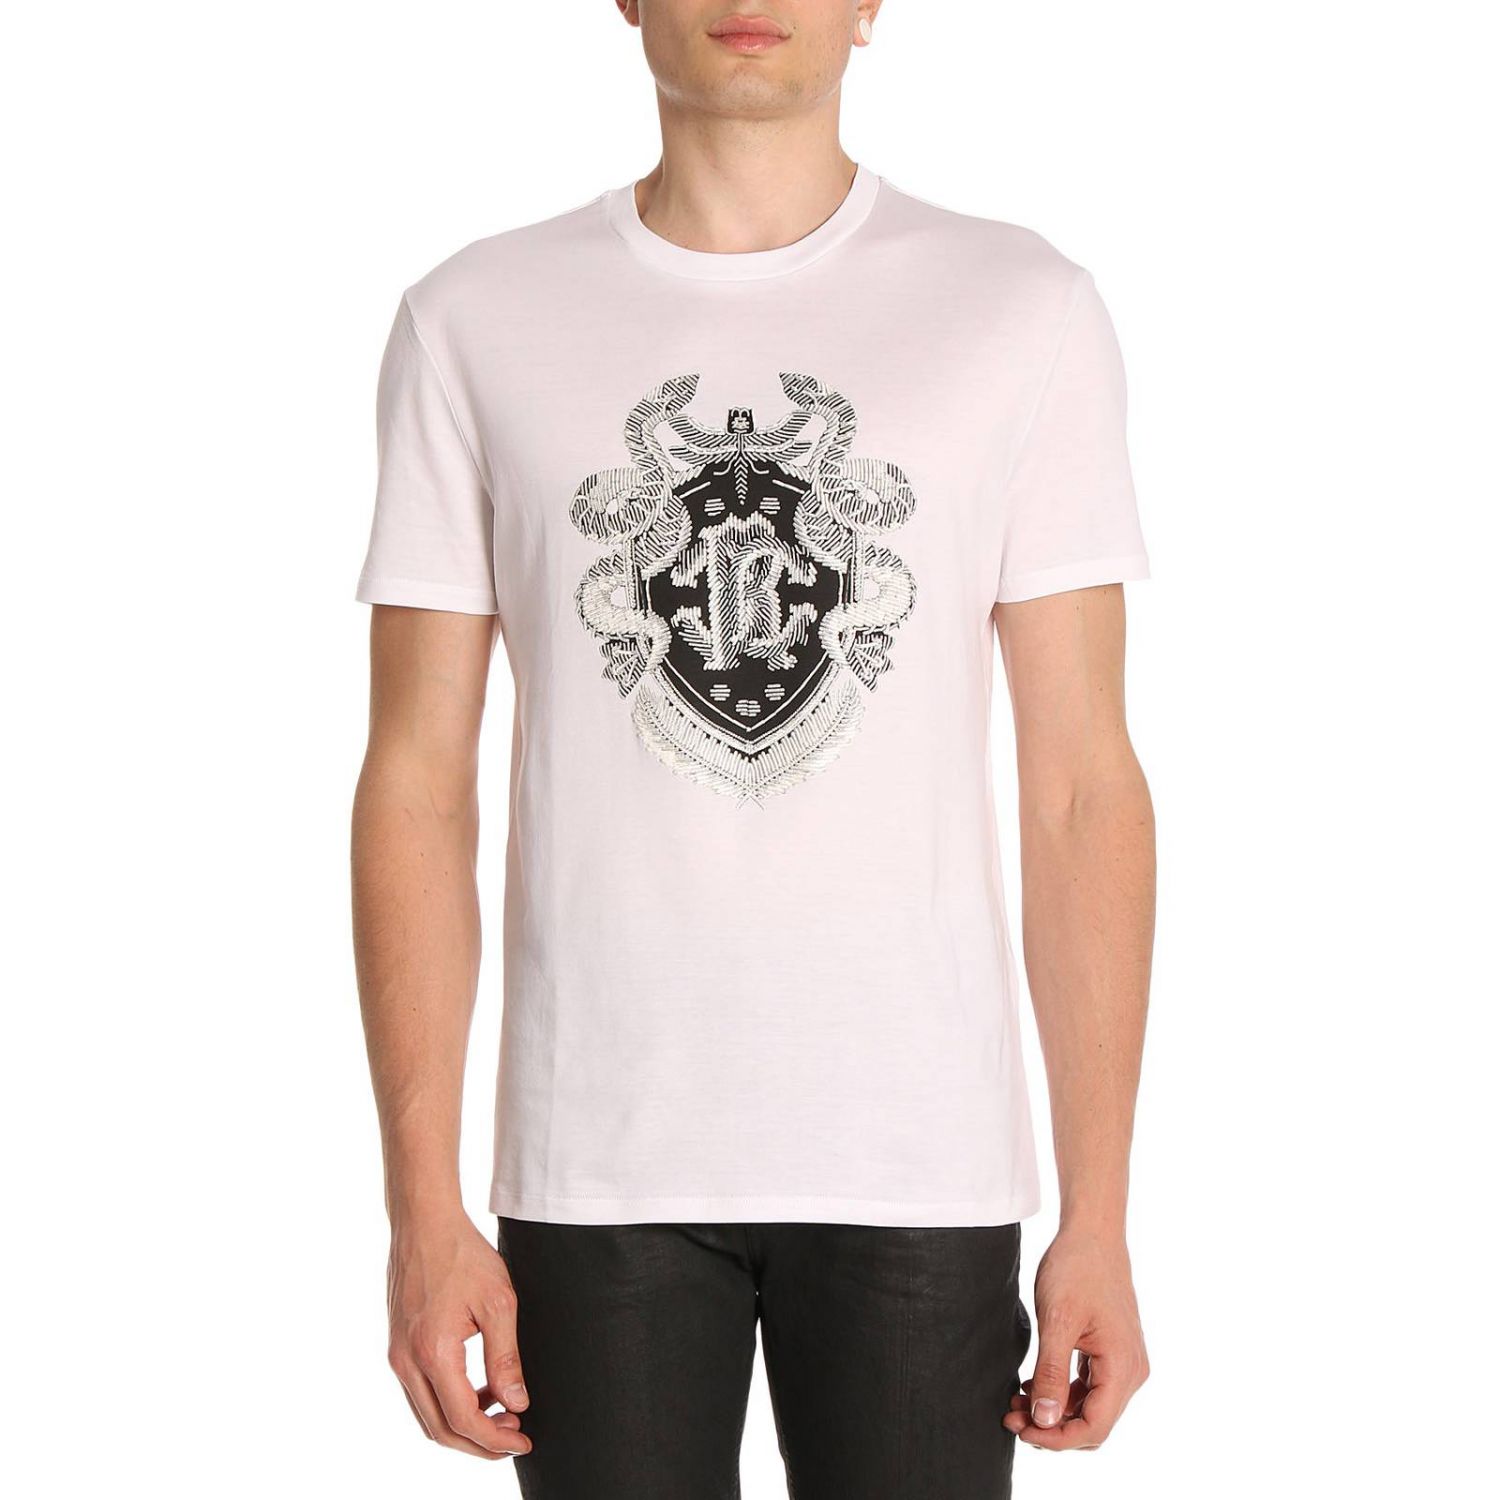 Roberto Cavalli Outlet: T-shirt men - White | T-Shirt Roberto Cavalli ...